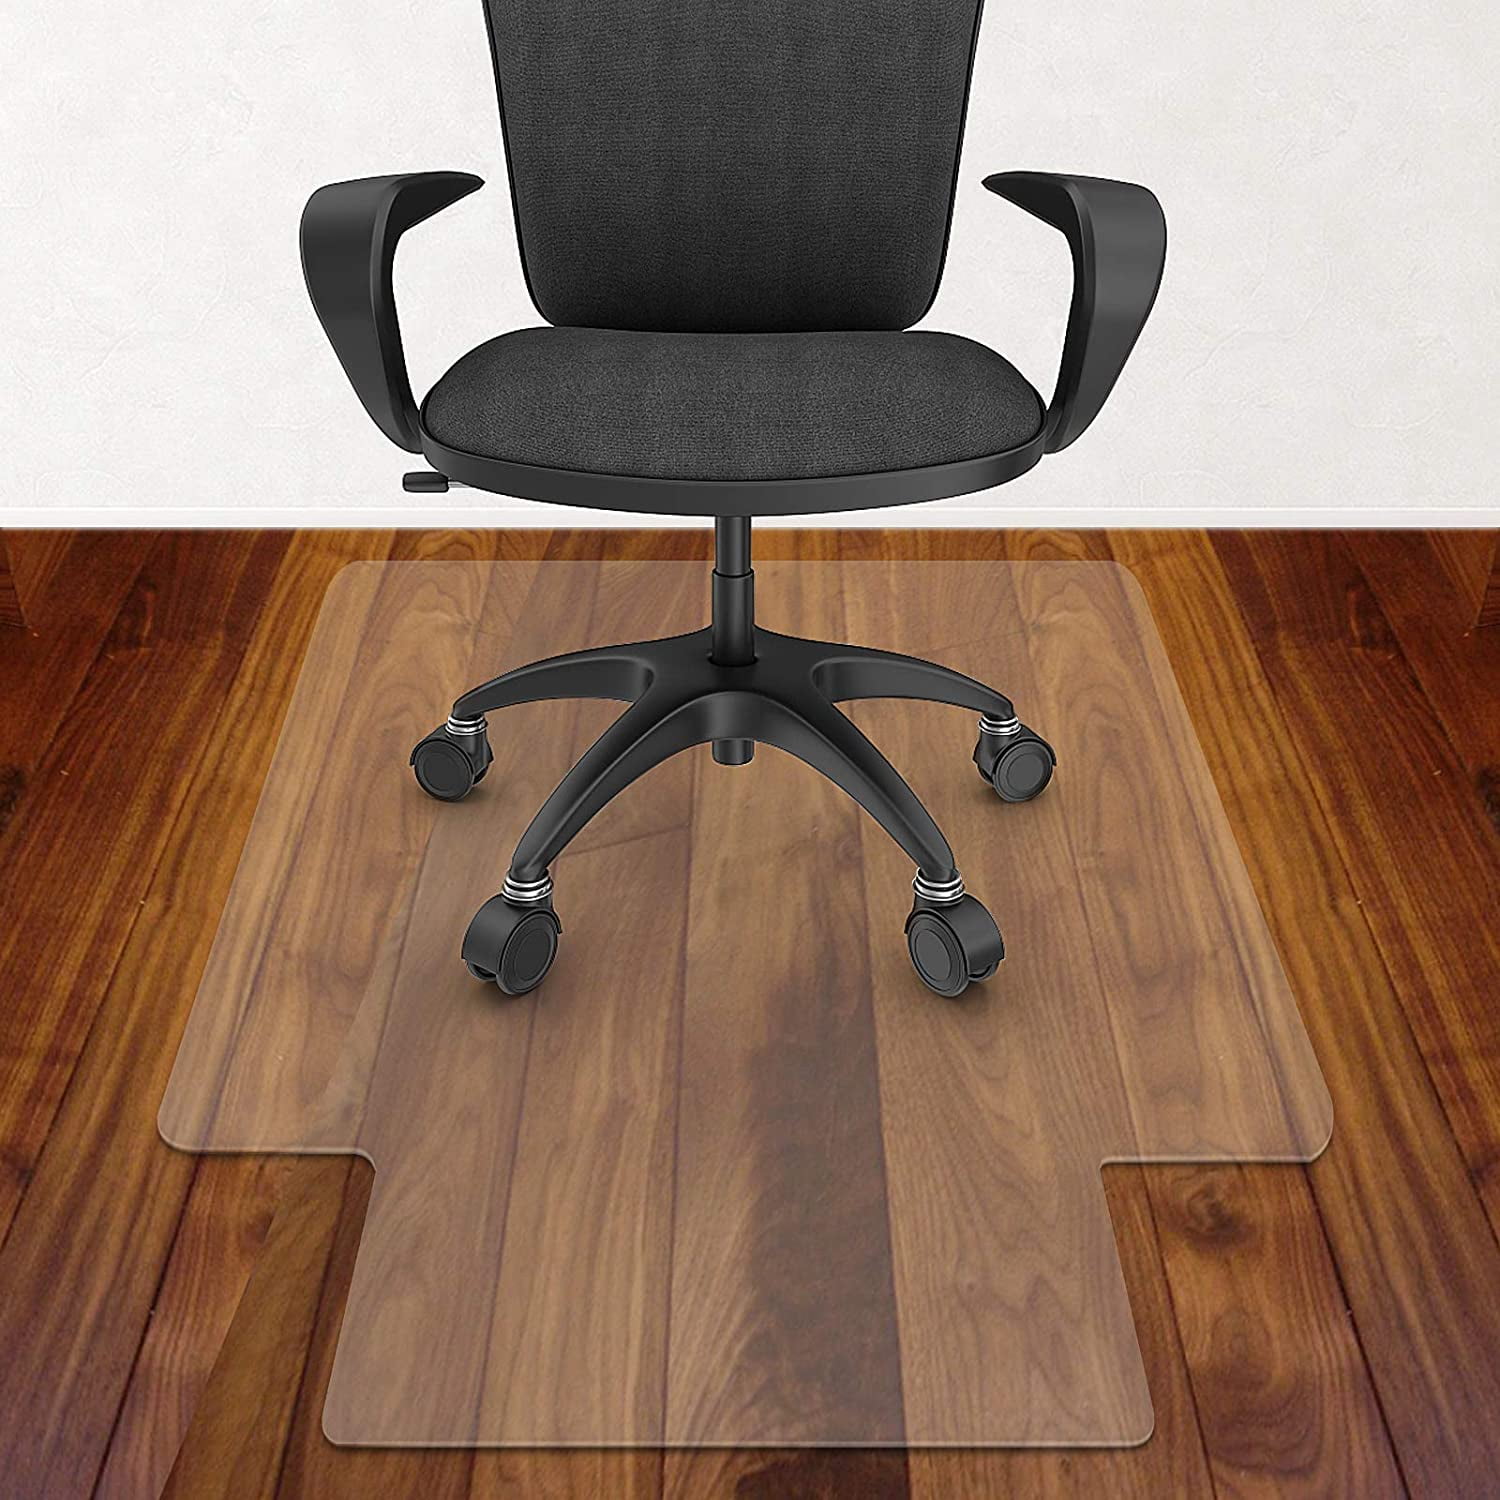 PVC Matte Desk Office Chair Floor Mat Protector for Hard Wood Floors 48" x 36" 